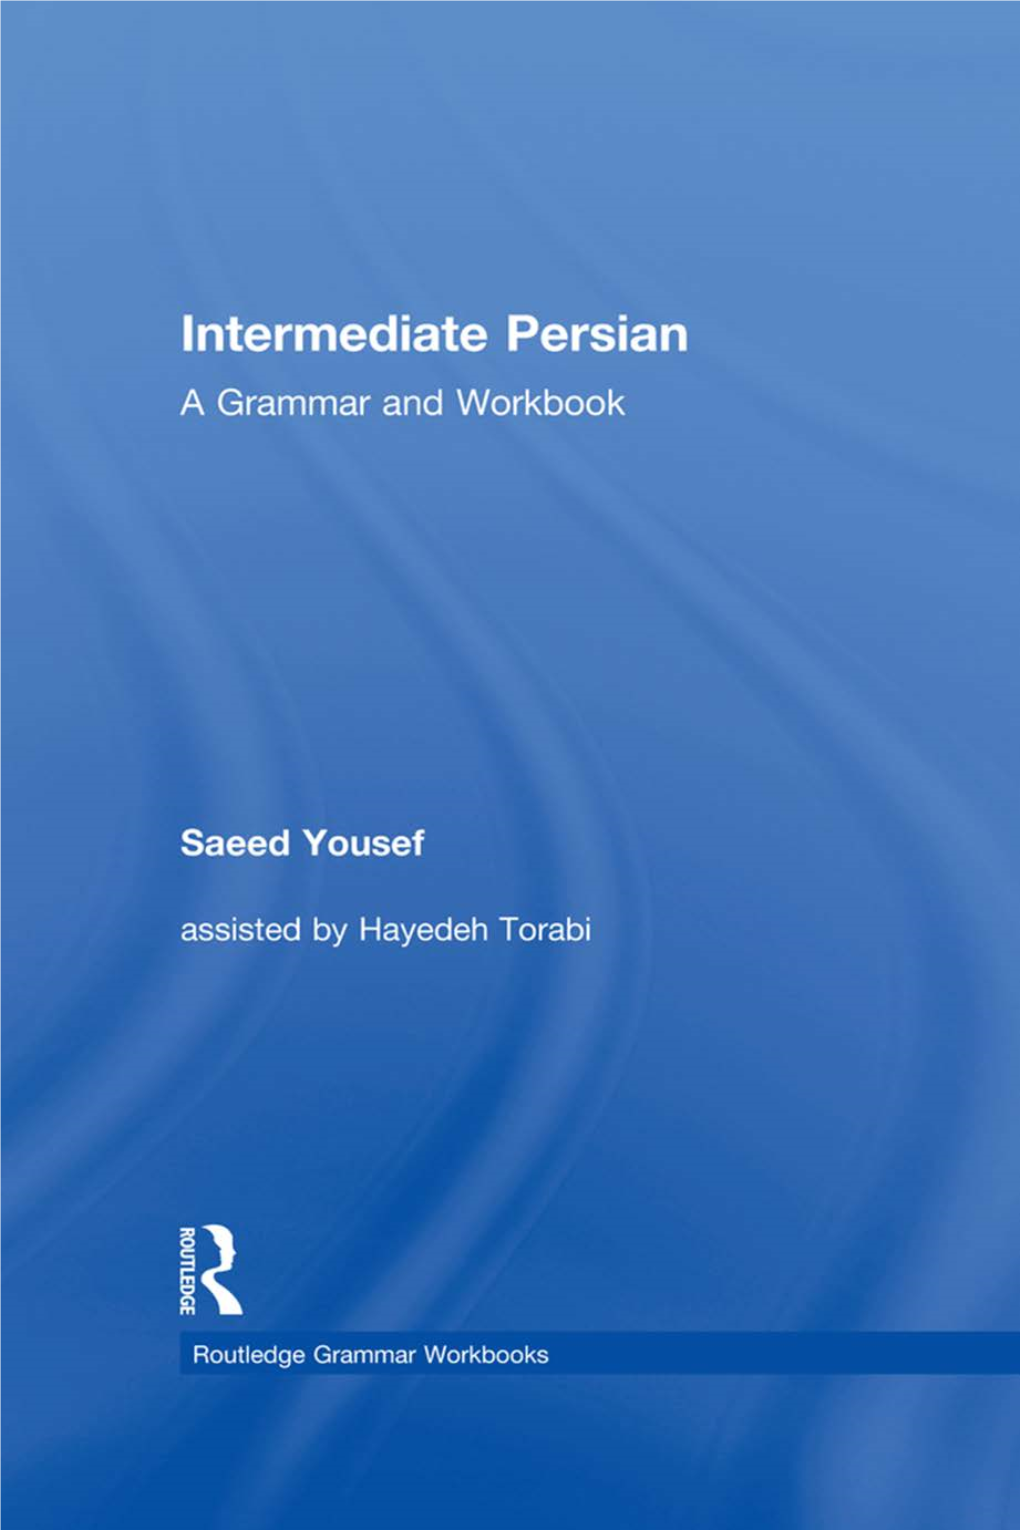 Intermediate Persian: a Grammar and Workbook